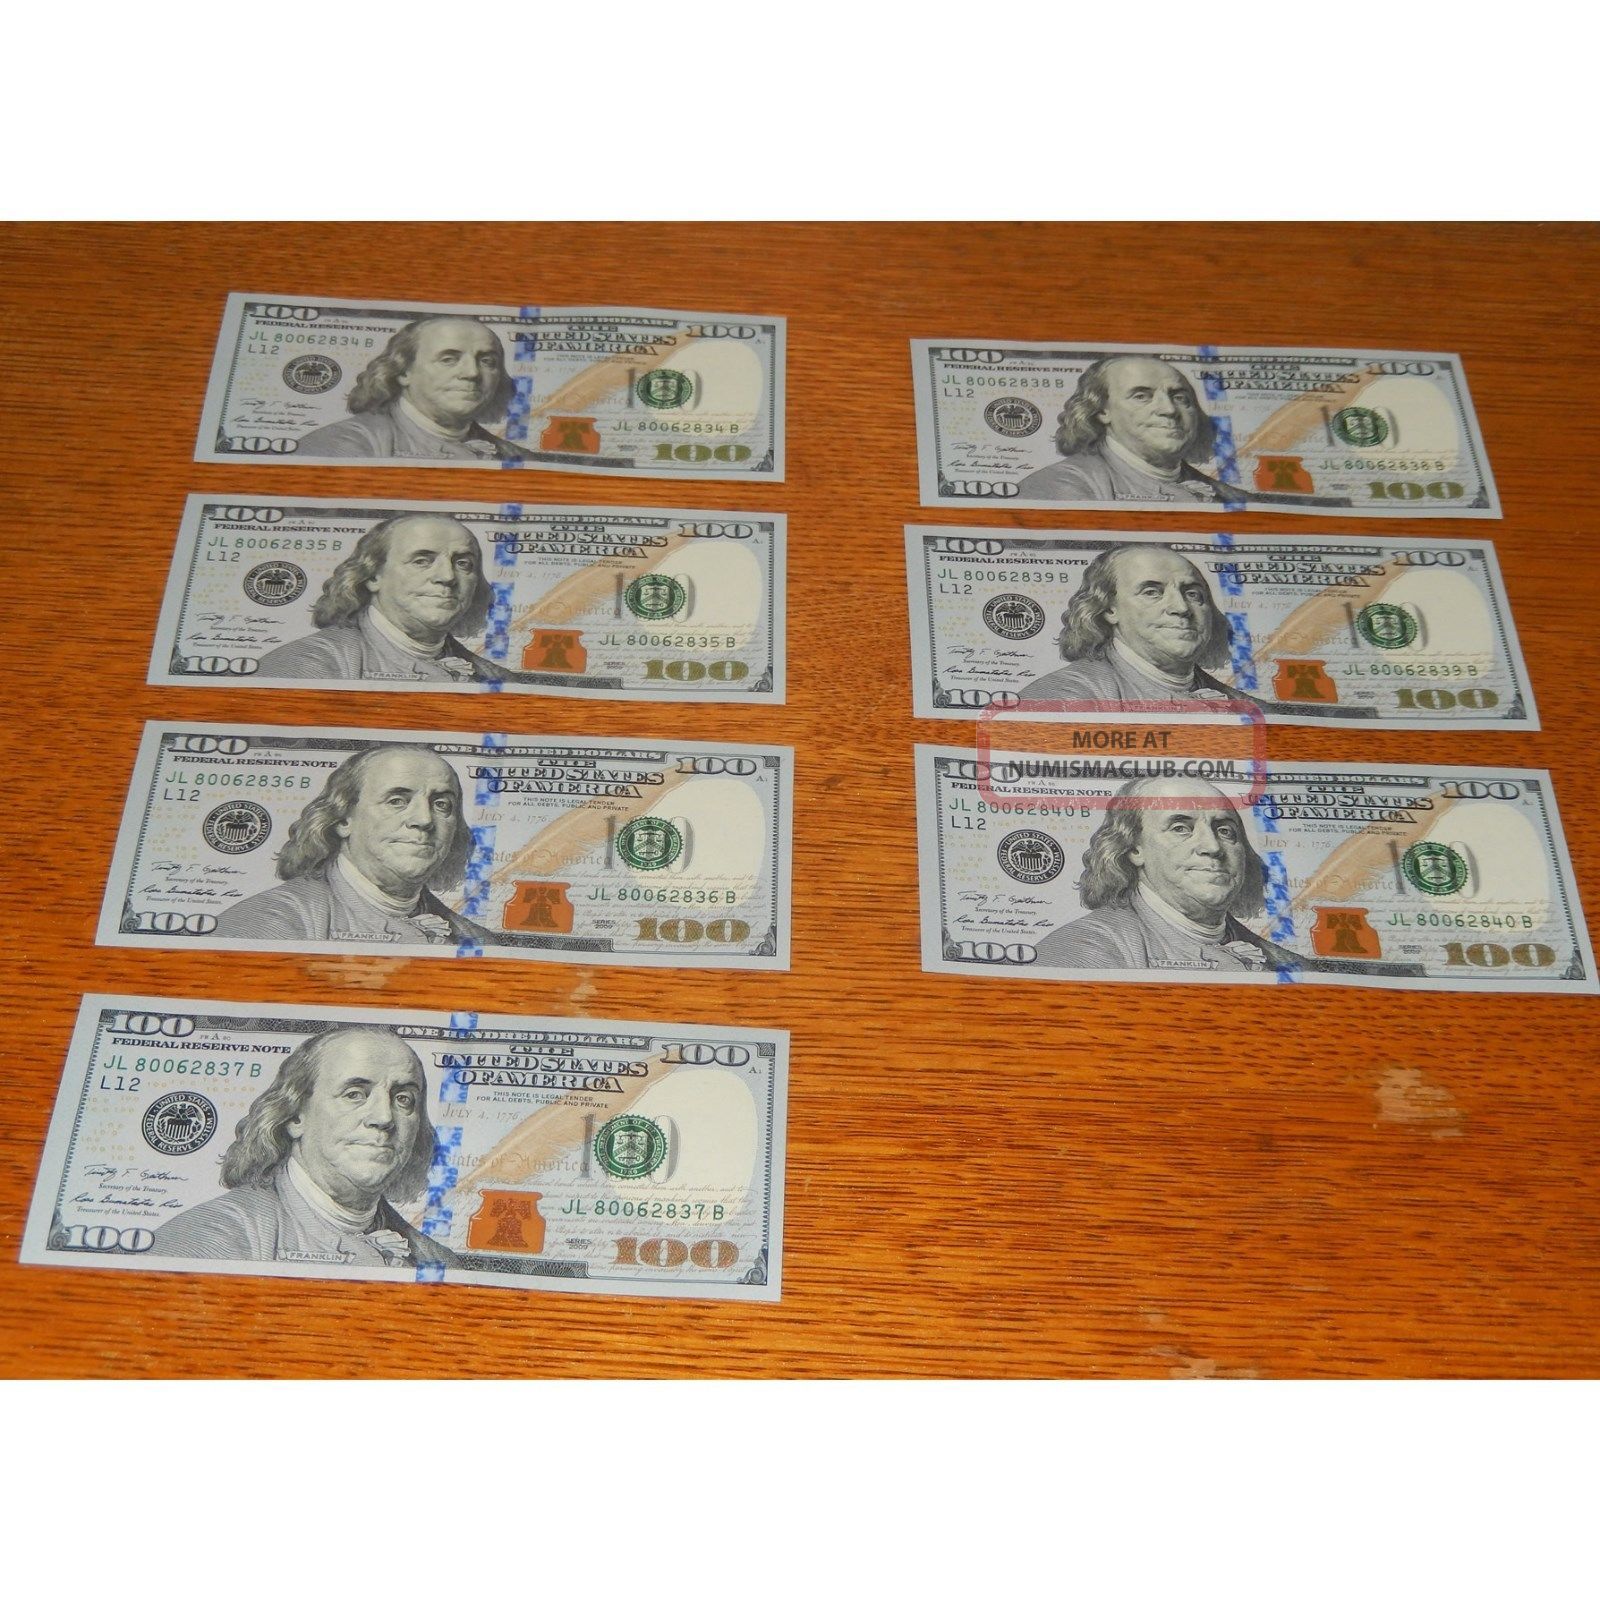 $100 Dollar Bills Seven (7) 2009 Unc Consecutive Serial No.  L12 Jl80062834b - 840b Small Size Notes photo